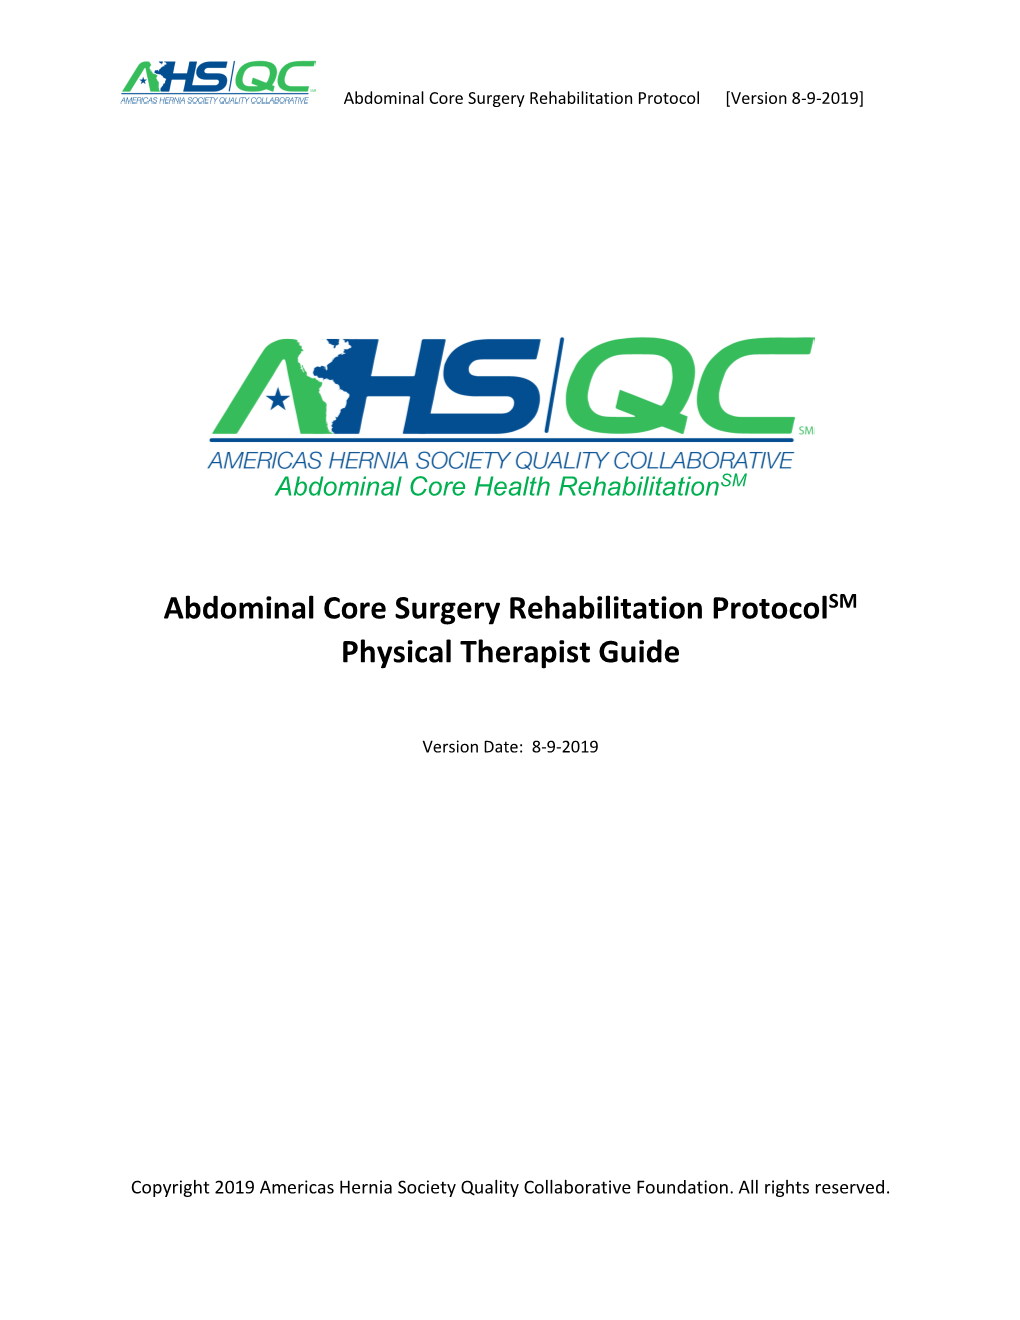 AHSQC Abdominal Core Surgery Rehabilitation Protocol Physical